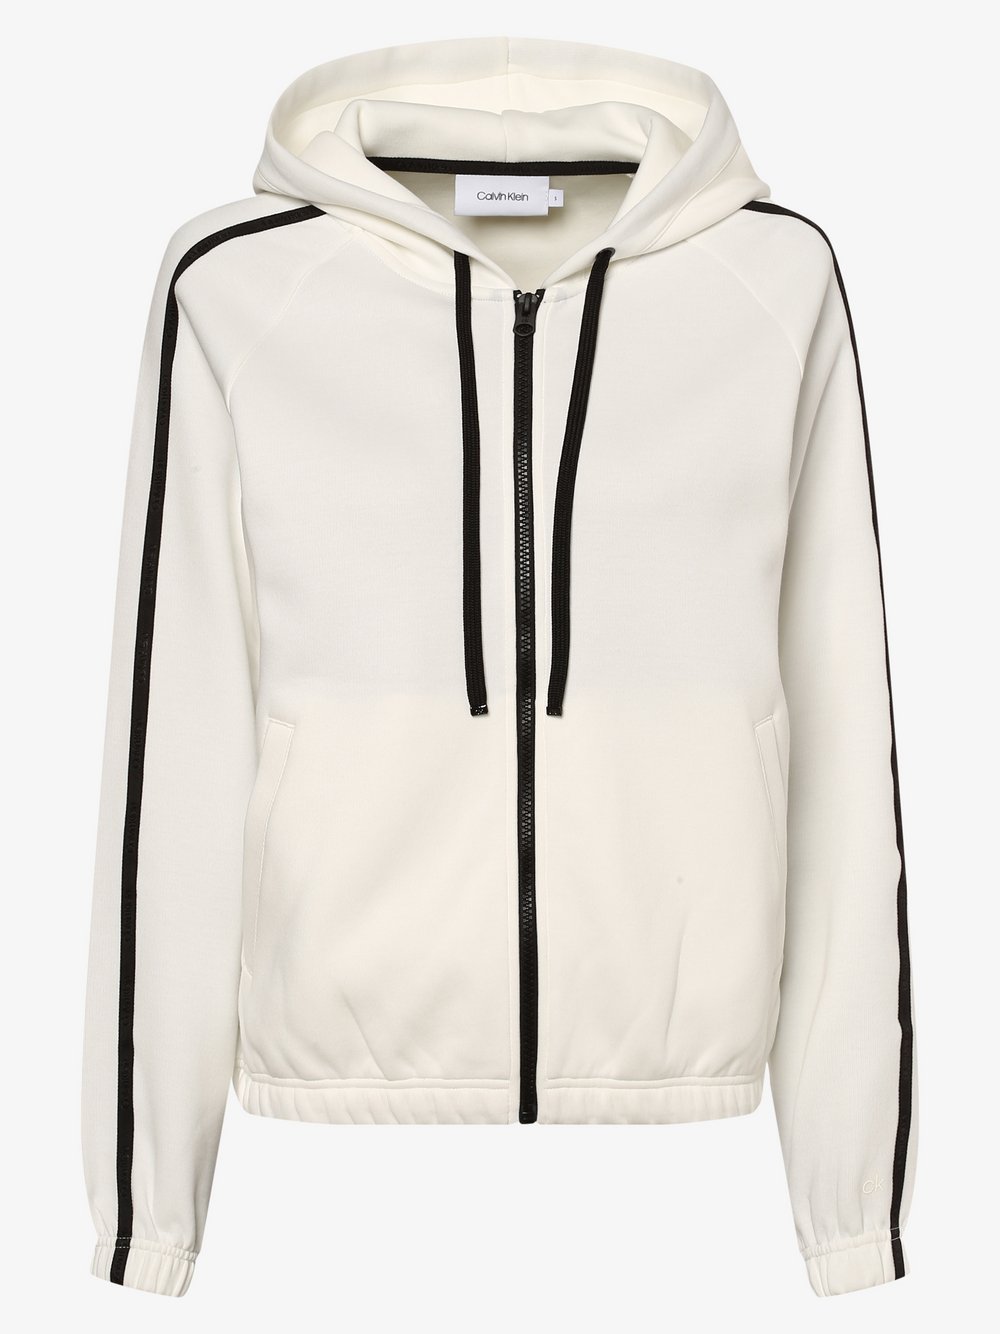 Calvin Klein - Damska kurtka z kapturem, biały